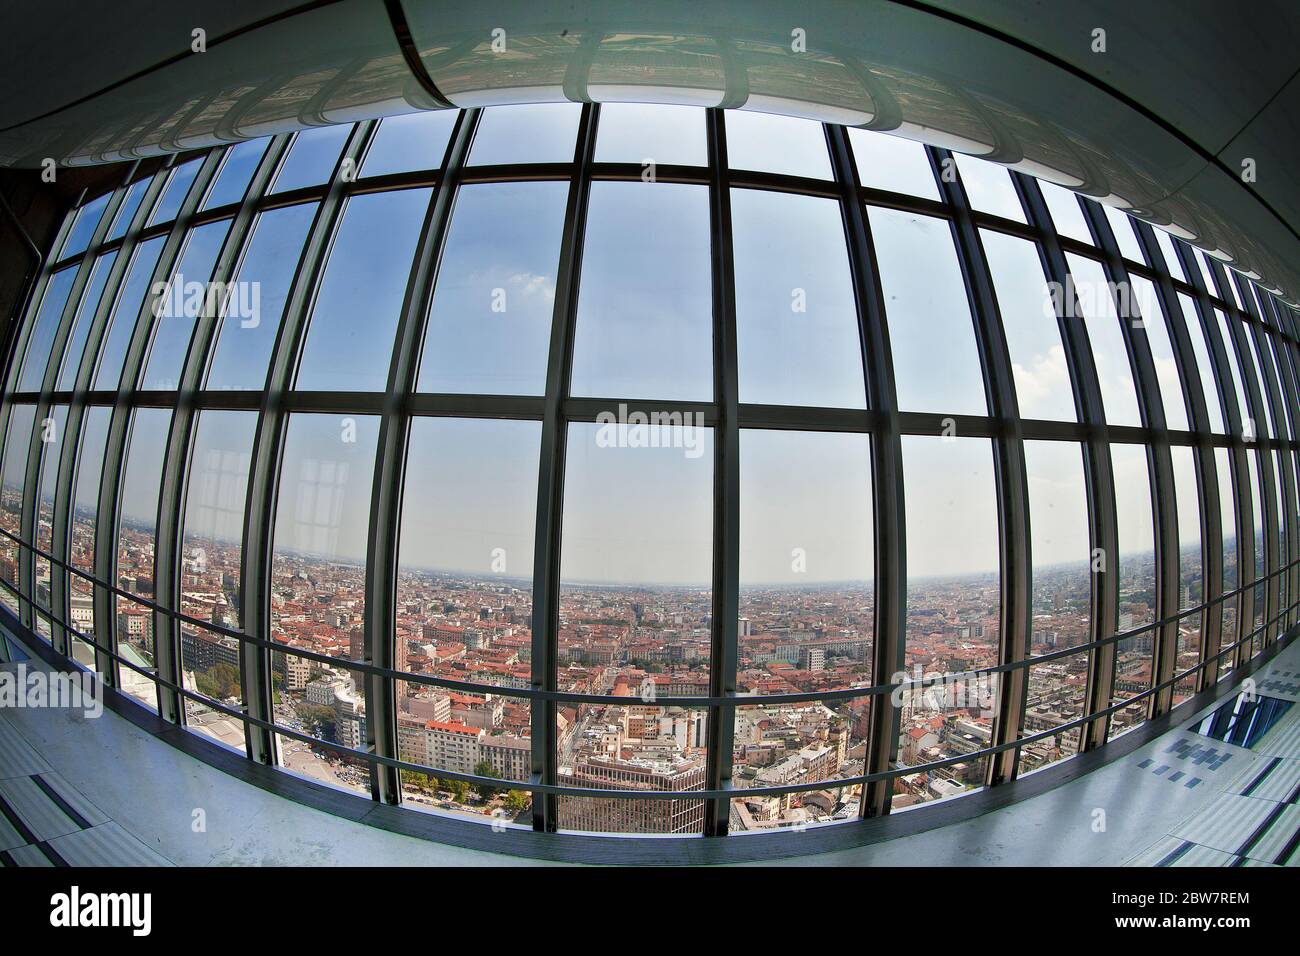 Europe, Italy, Lombardy, Milan, Pirelli Building 'Pirellone' Stock Photo